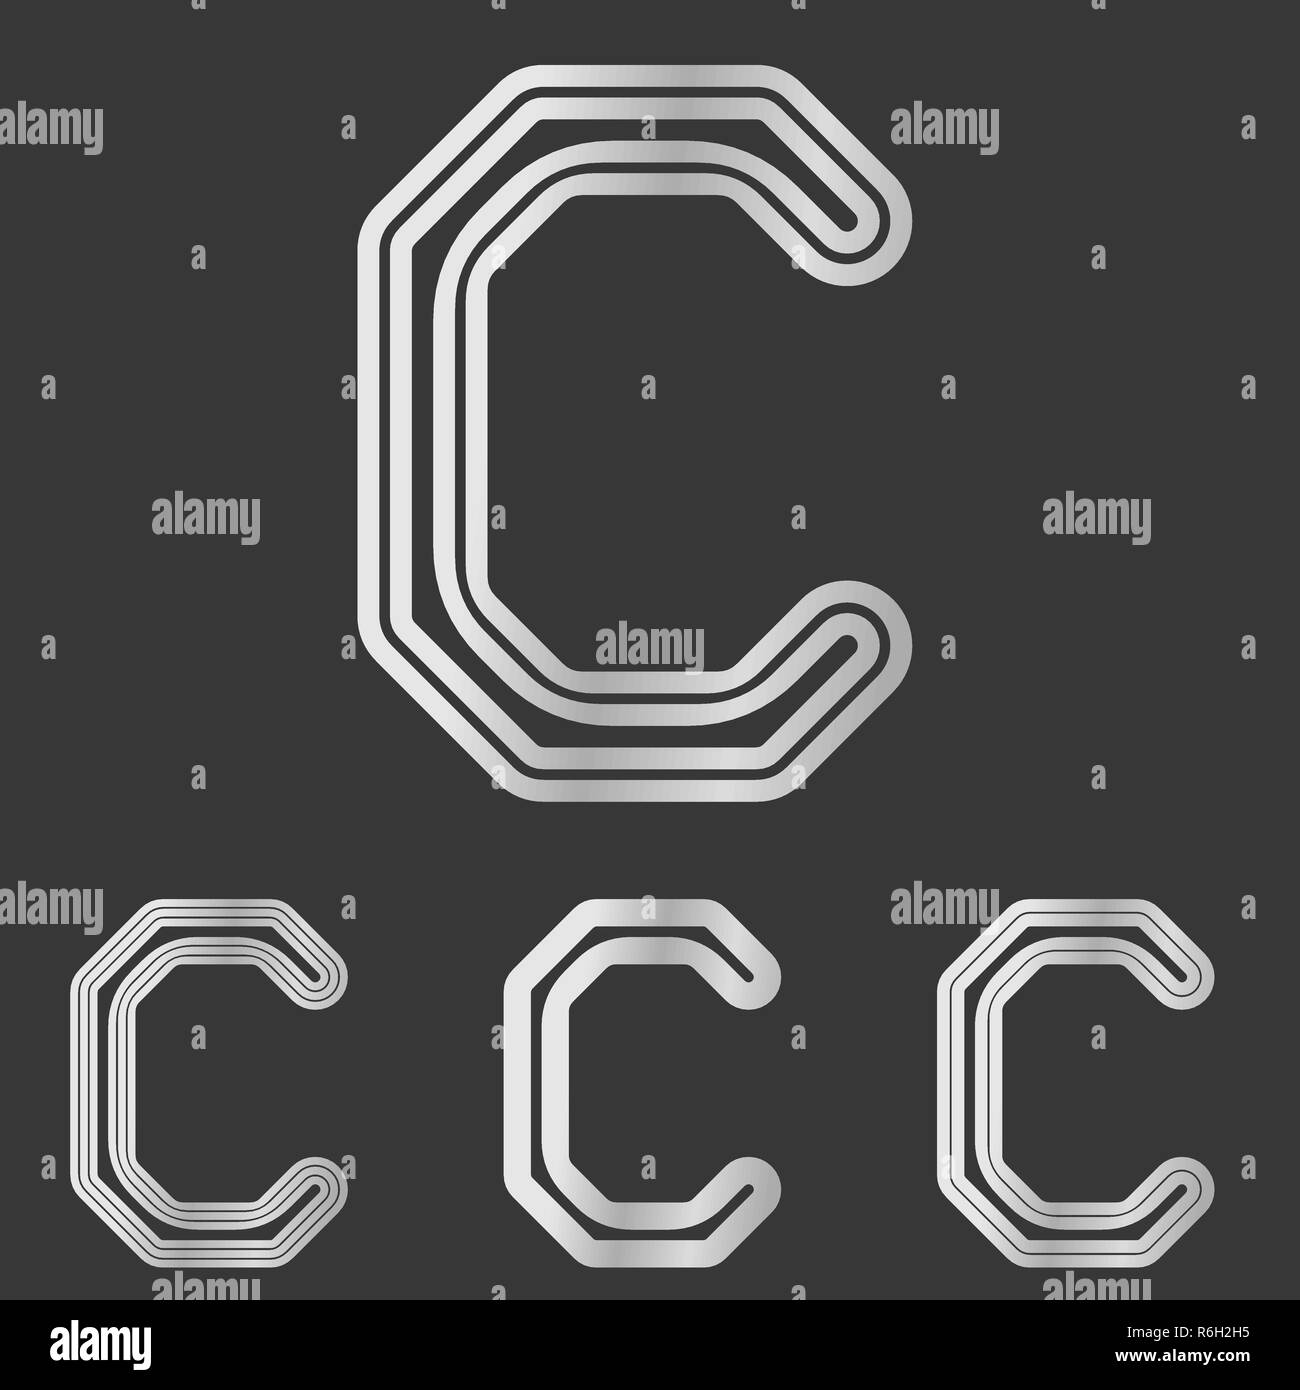 Silver letter c logo design set Stock Vector